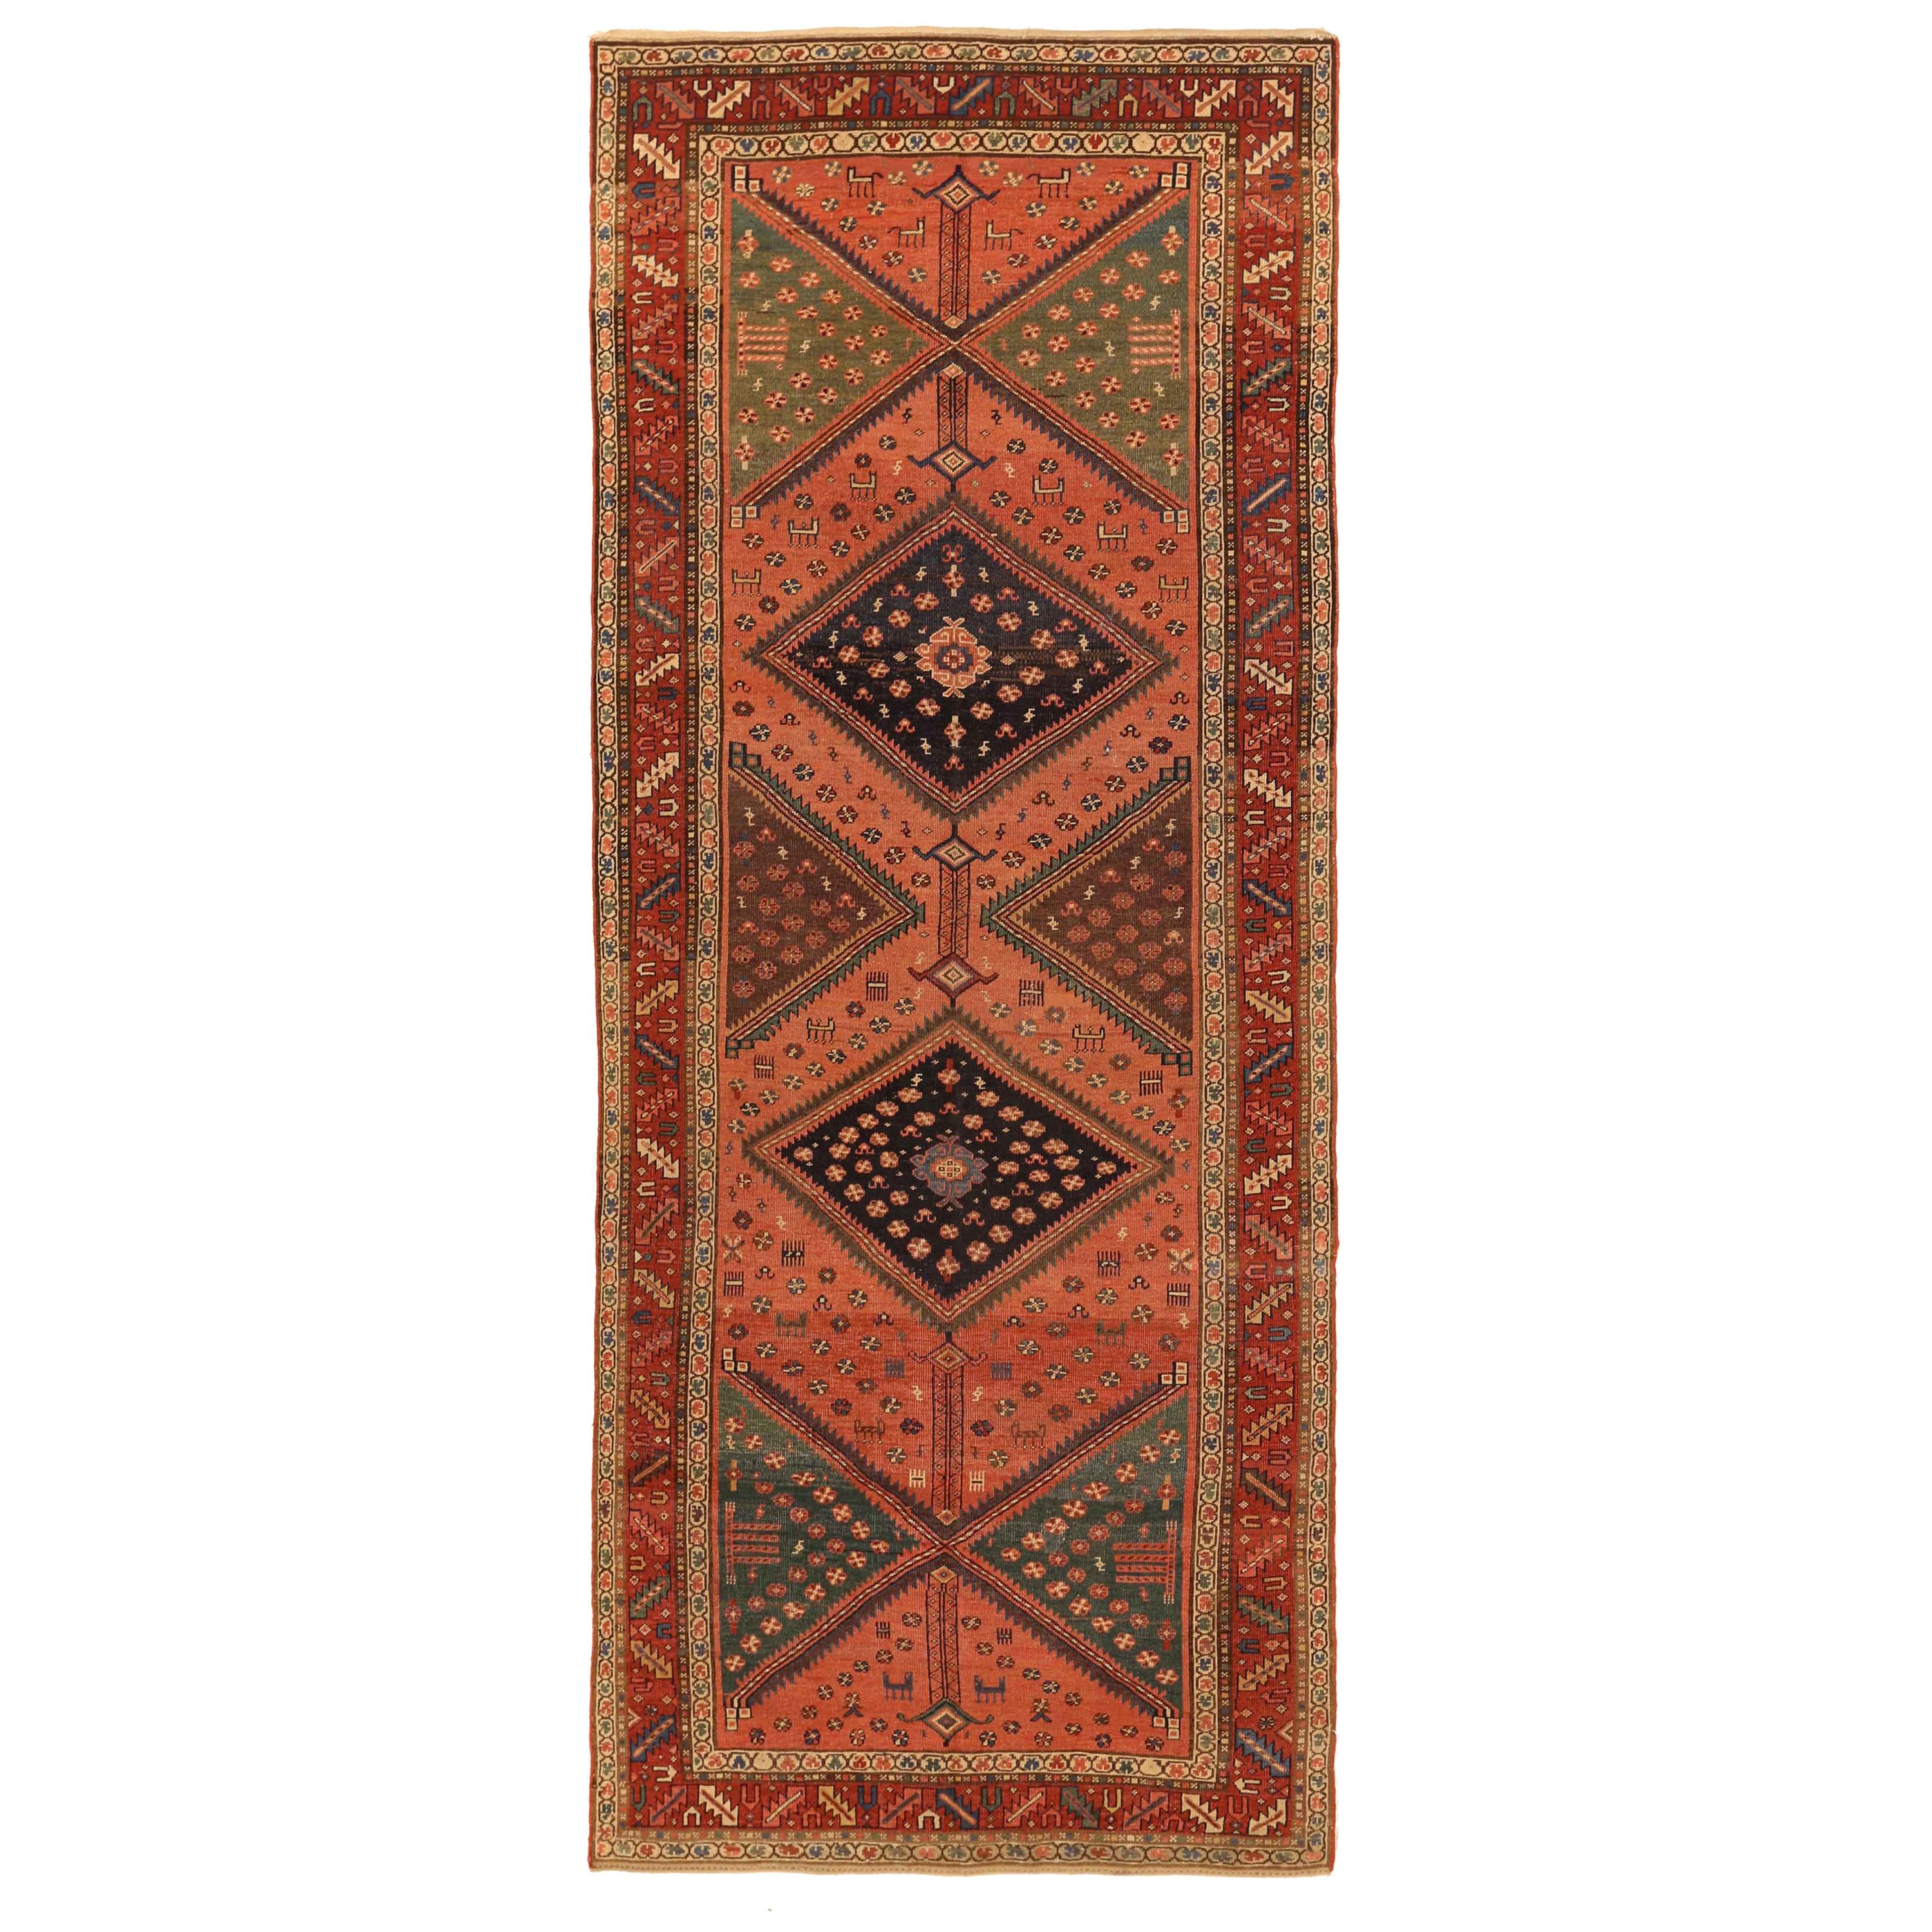 Antique Persian Rug Bijar Design with Elegant Geometric Patterns, circa 1950s